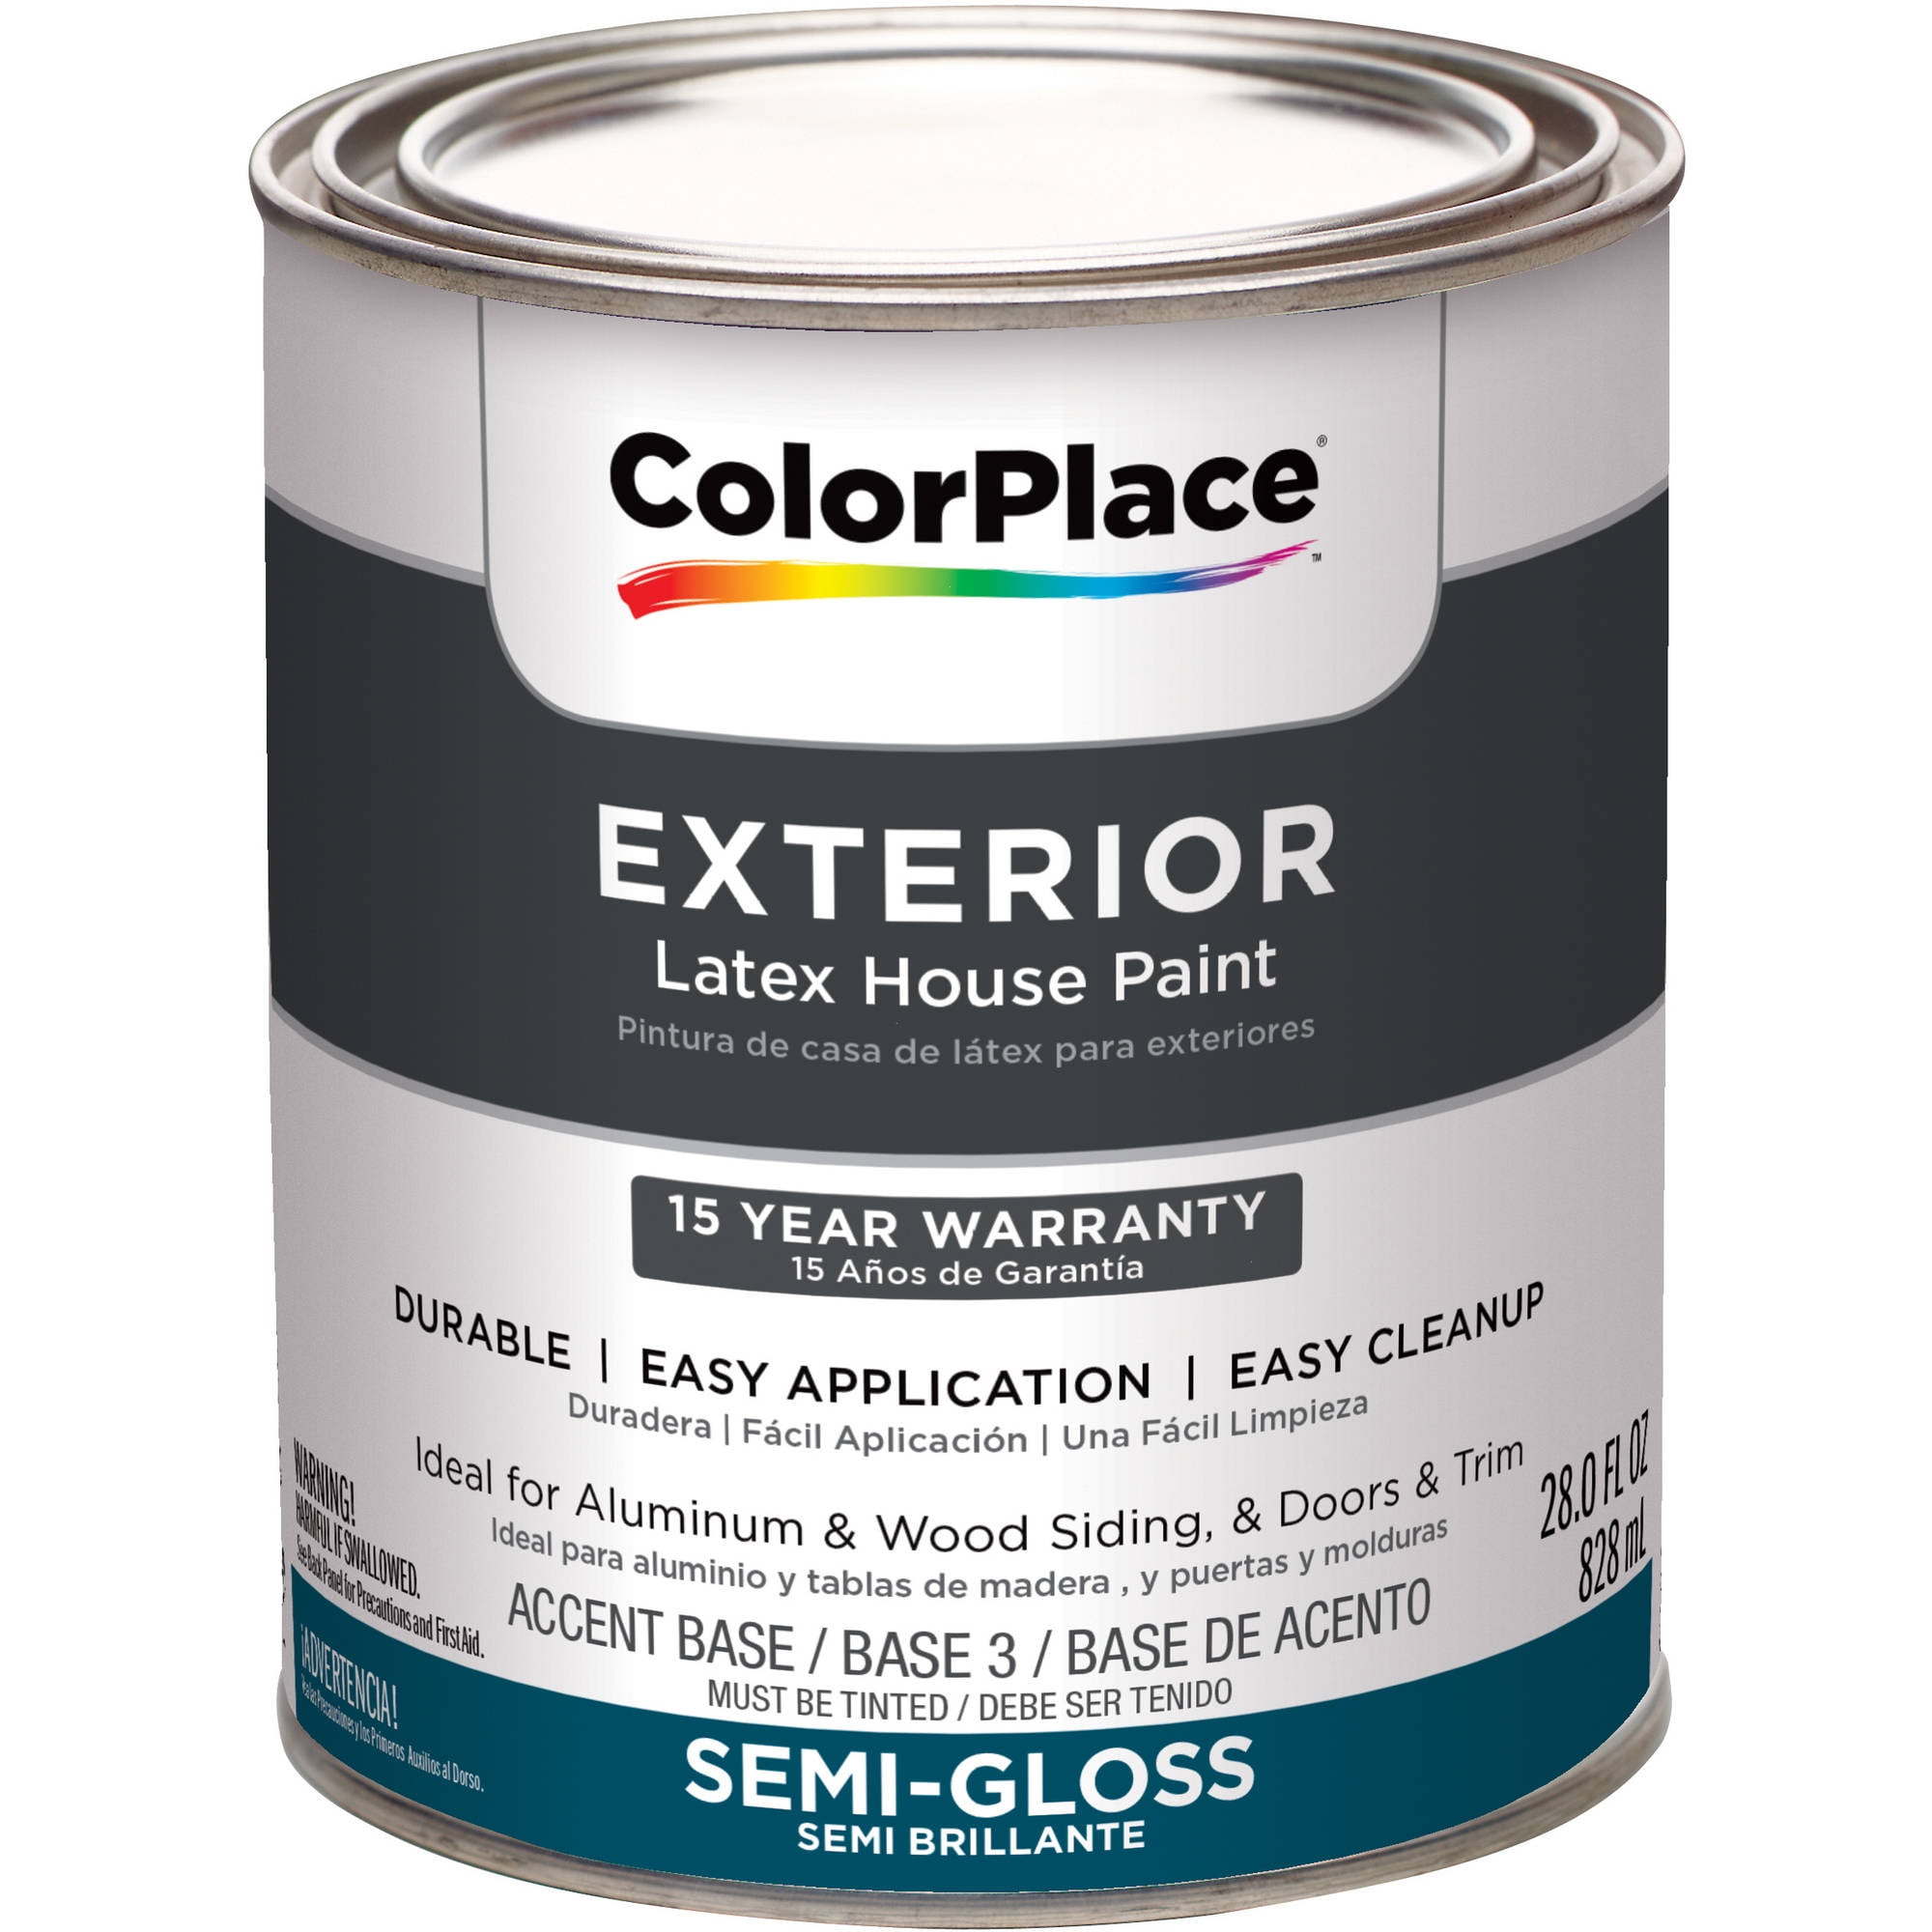 ColorPlace Exterior Semi-Gloss Accent Base Paint, 1 qt - Walmart.com ...